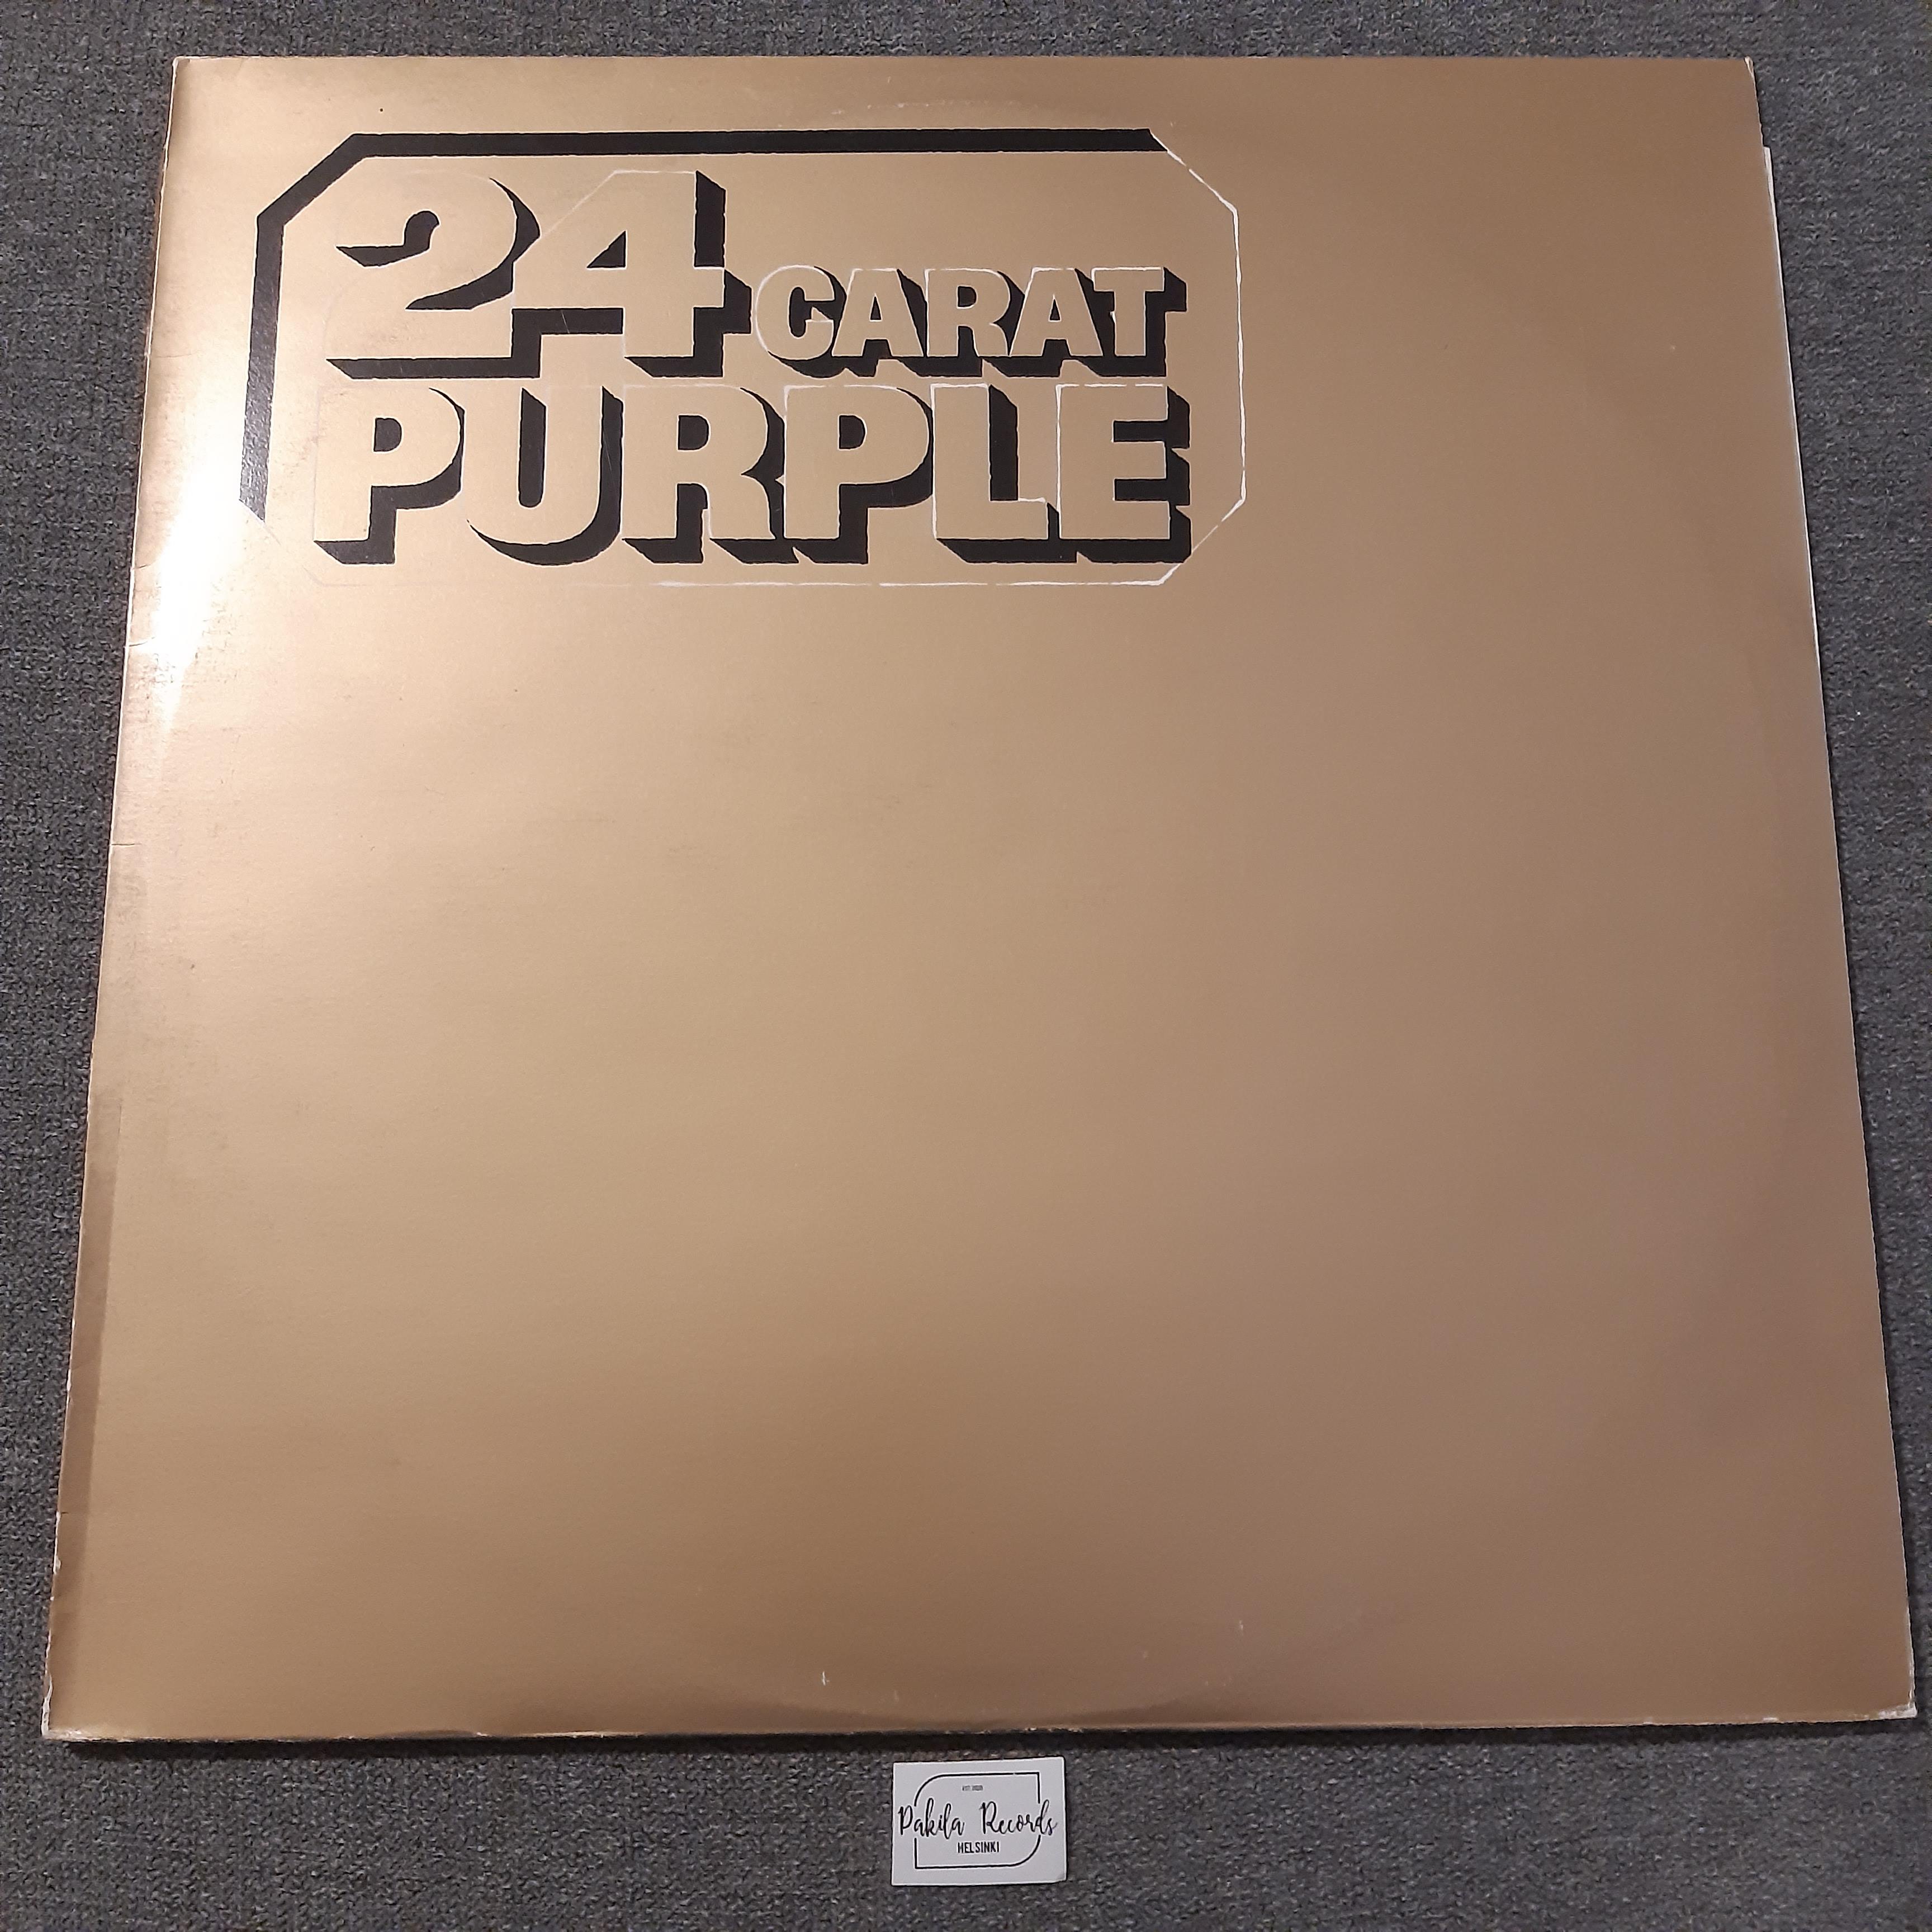 Deep Purple - 24 Carat Purple - LP (käytetty)